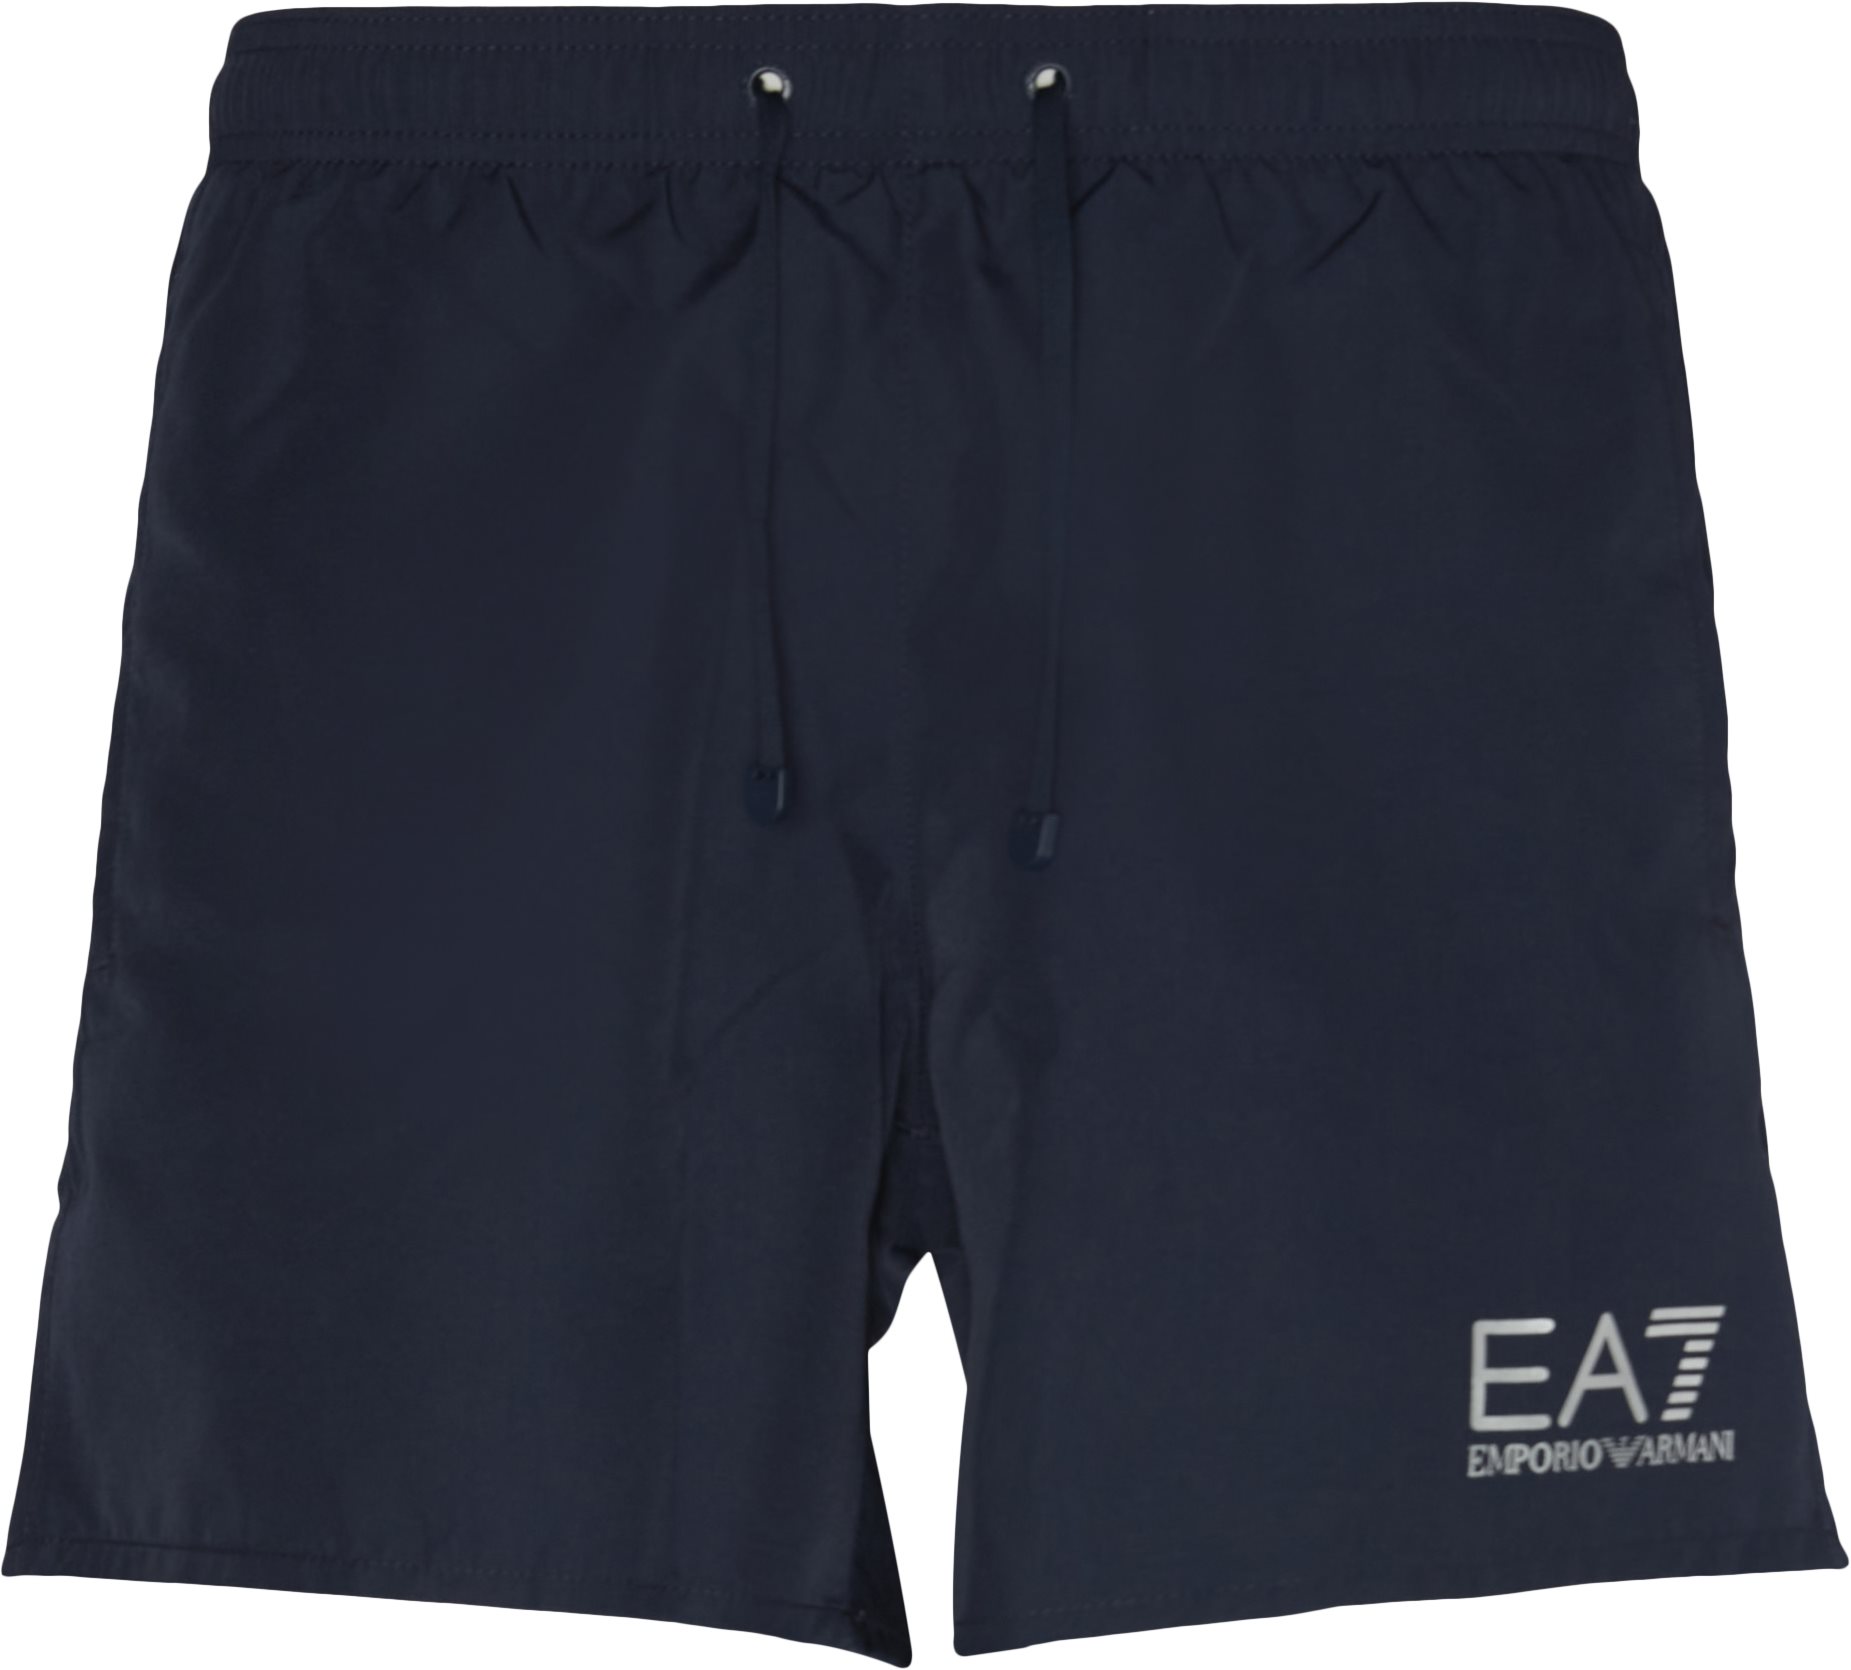 CC721 902000 Badshorts - Shorts - Regular fit - Blå